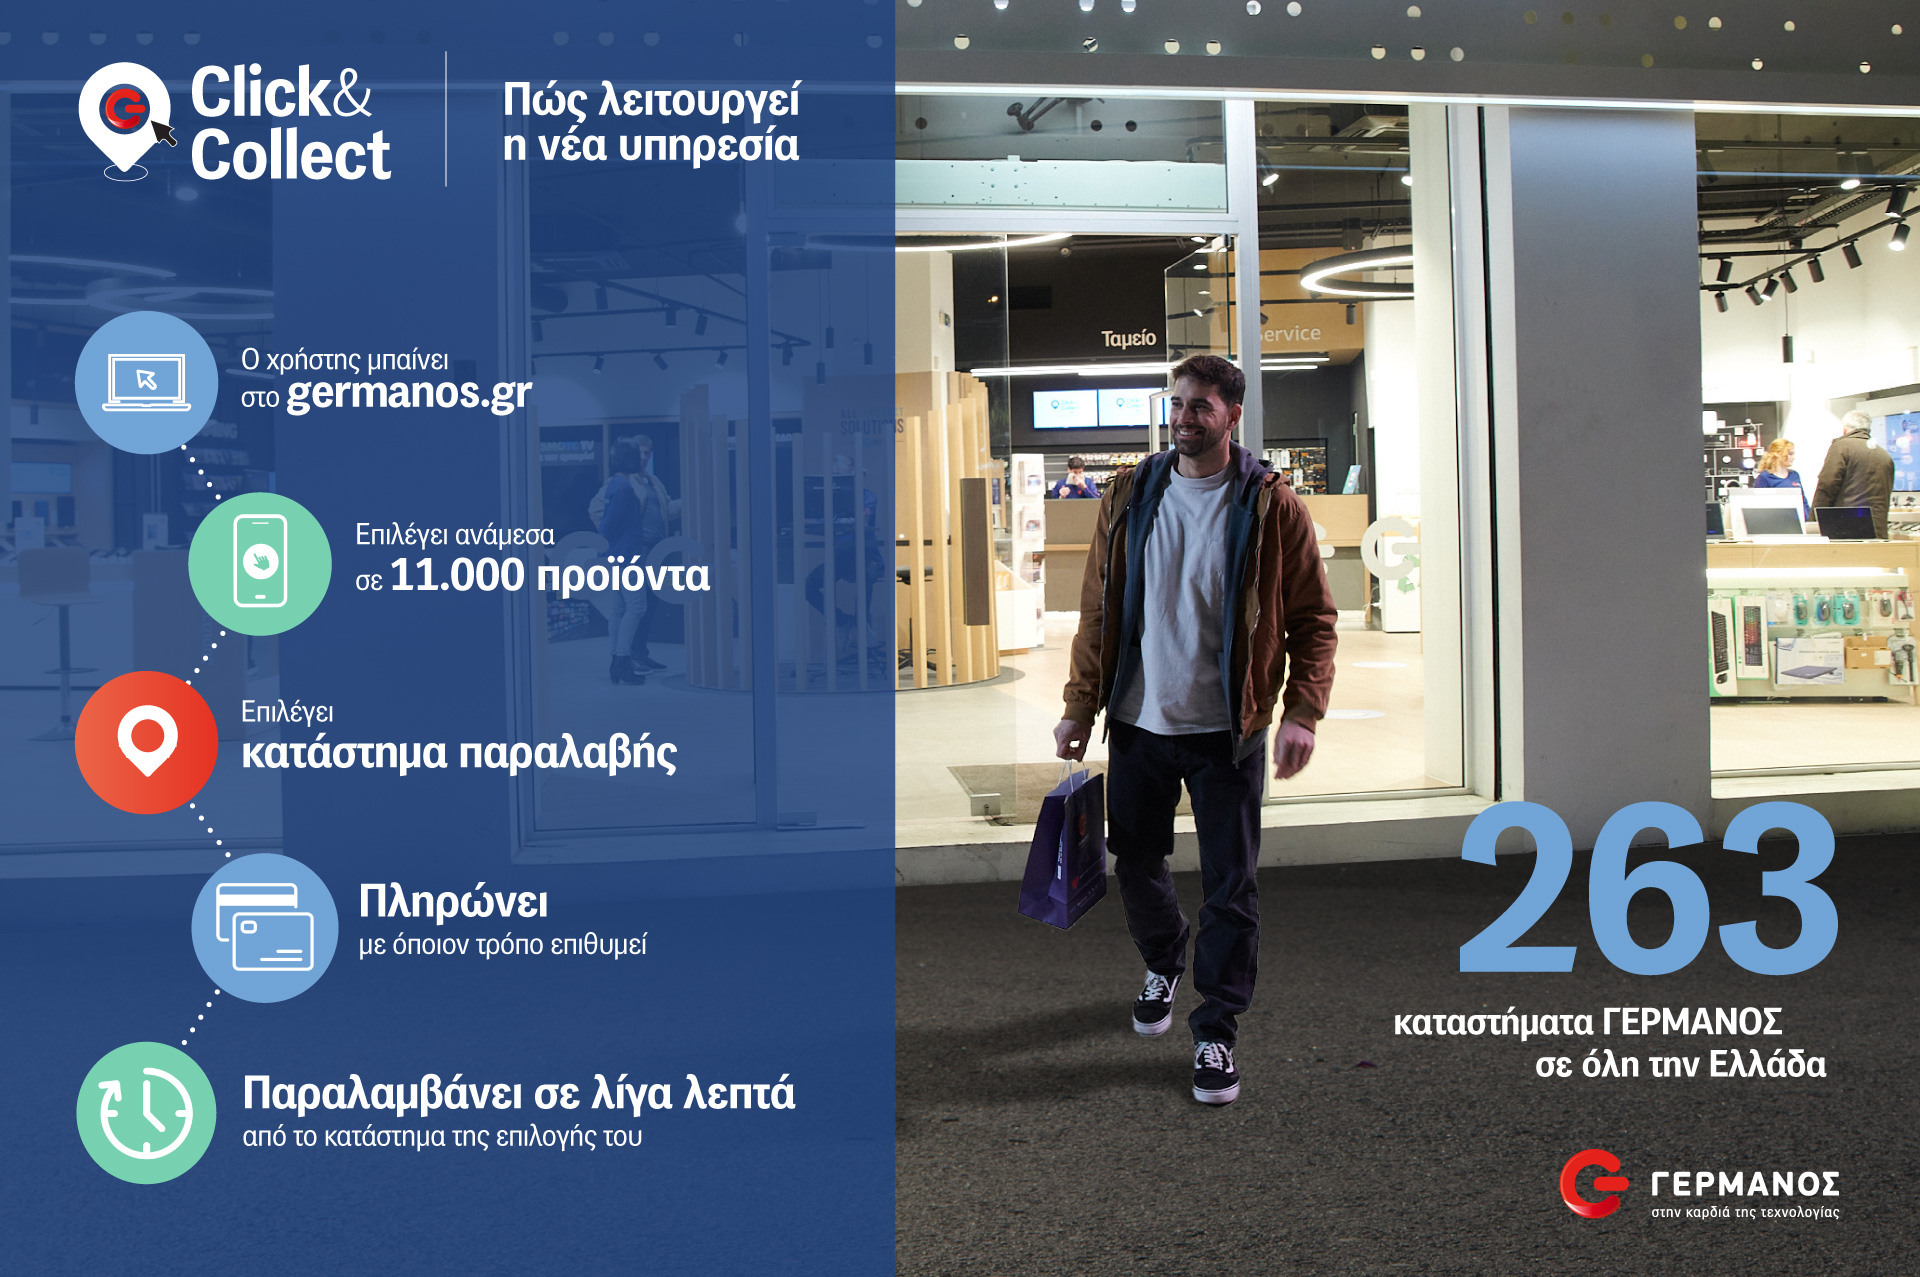 G Click & Collect: Παραγγελία online και άμεση παραλαβή σε ένα από τα 263 καταστήματα ΓΕΡΜΑΝΟΣ σε όλη την Ελλάδα